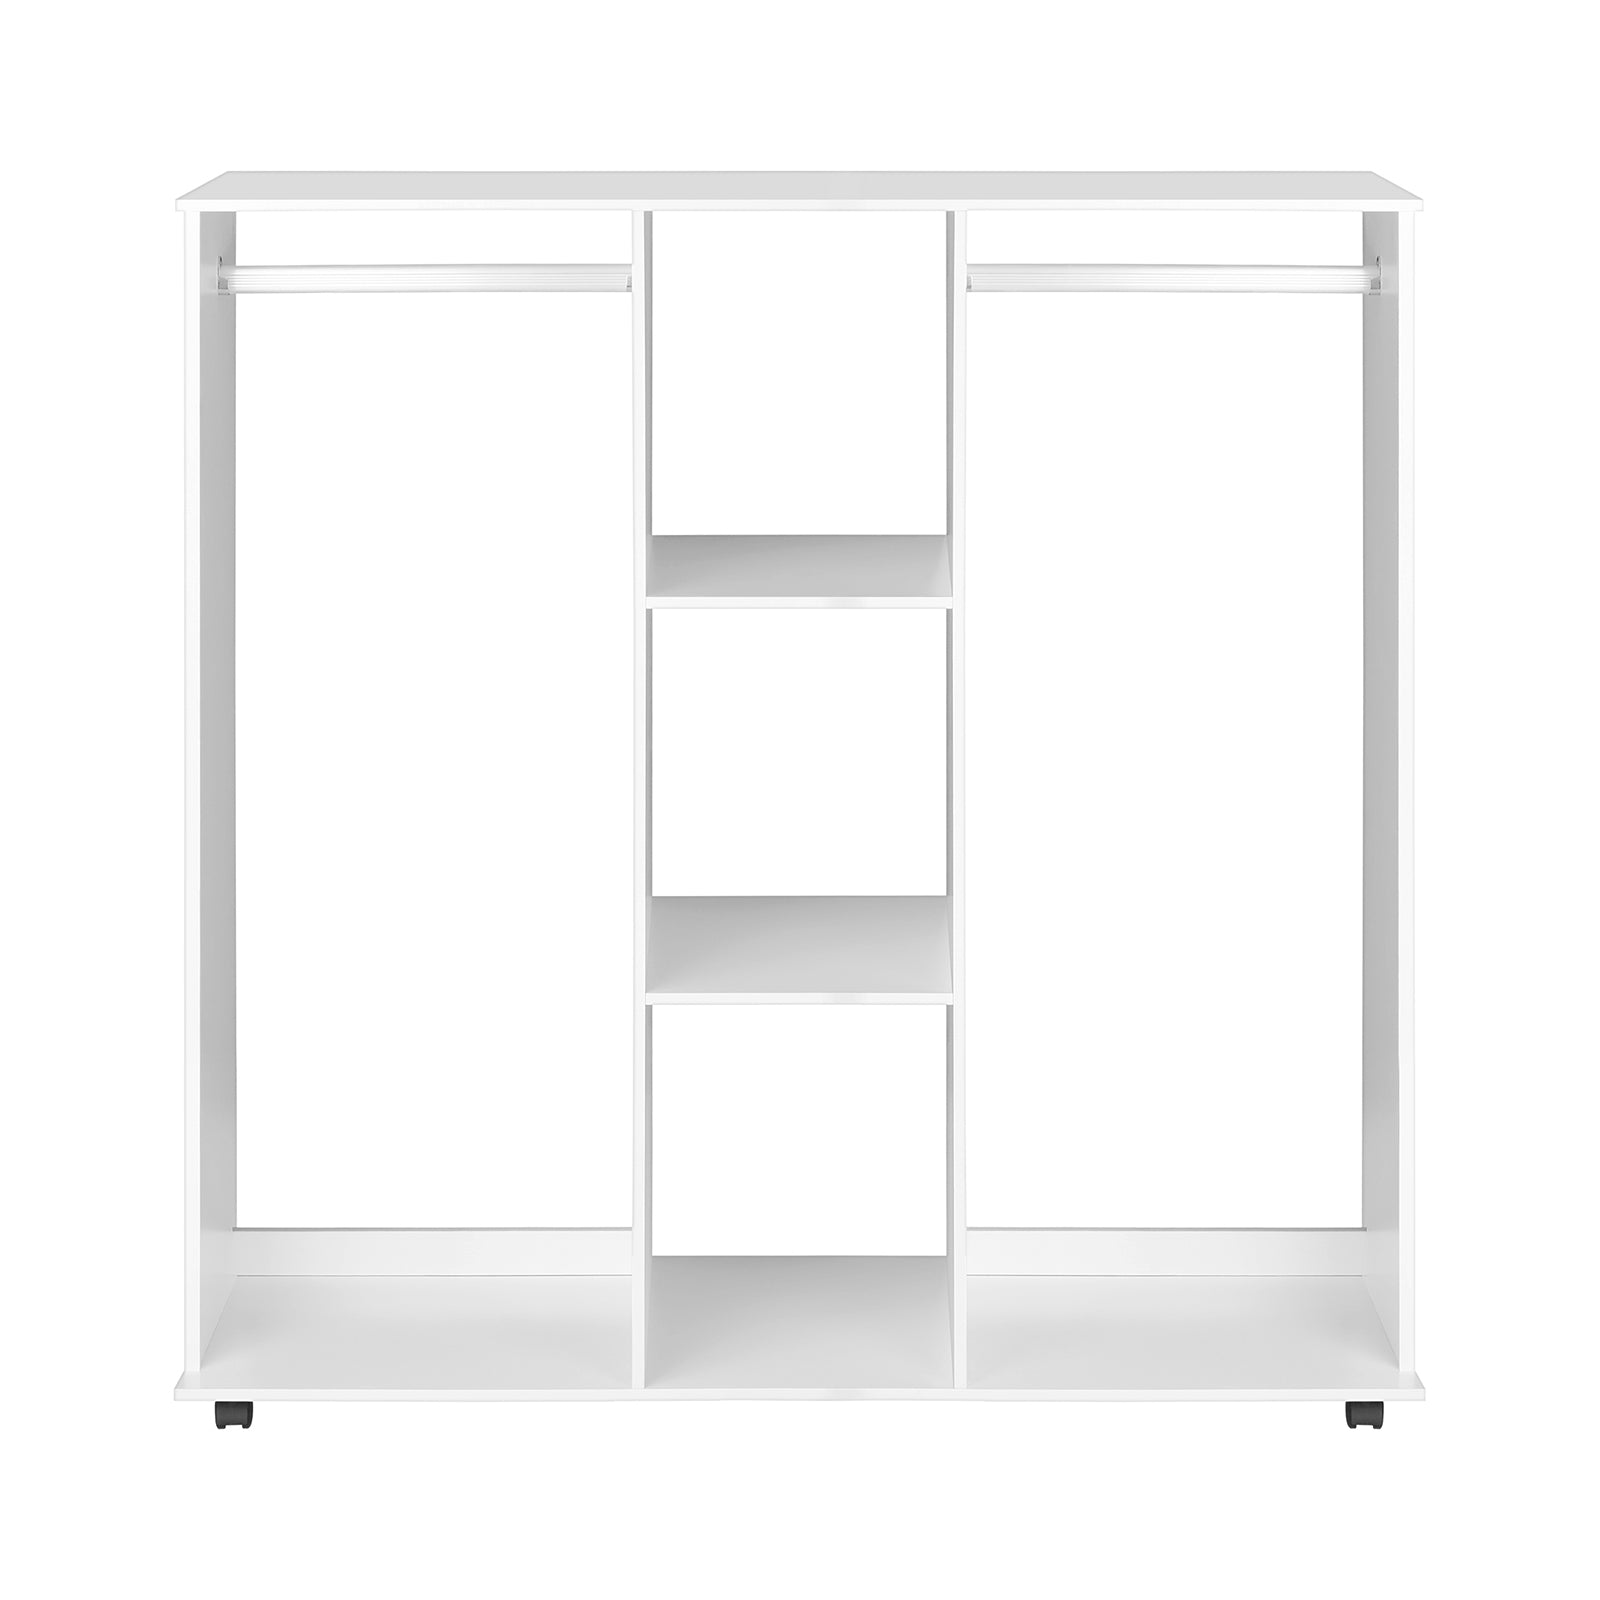 Single Mobile Open Wardrobe Storage Shelves Organizer With Clothes